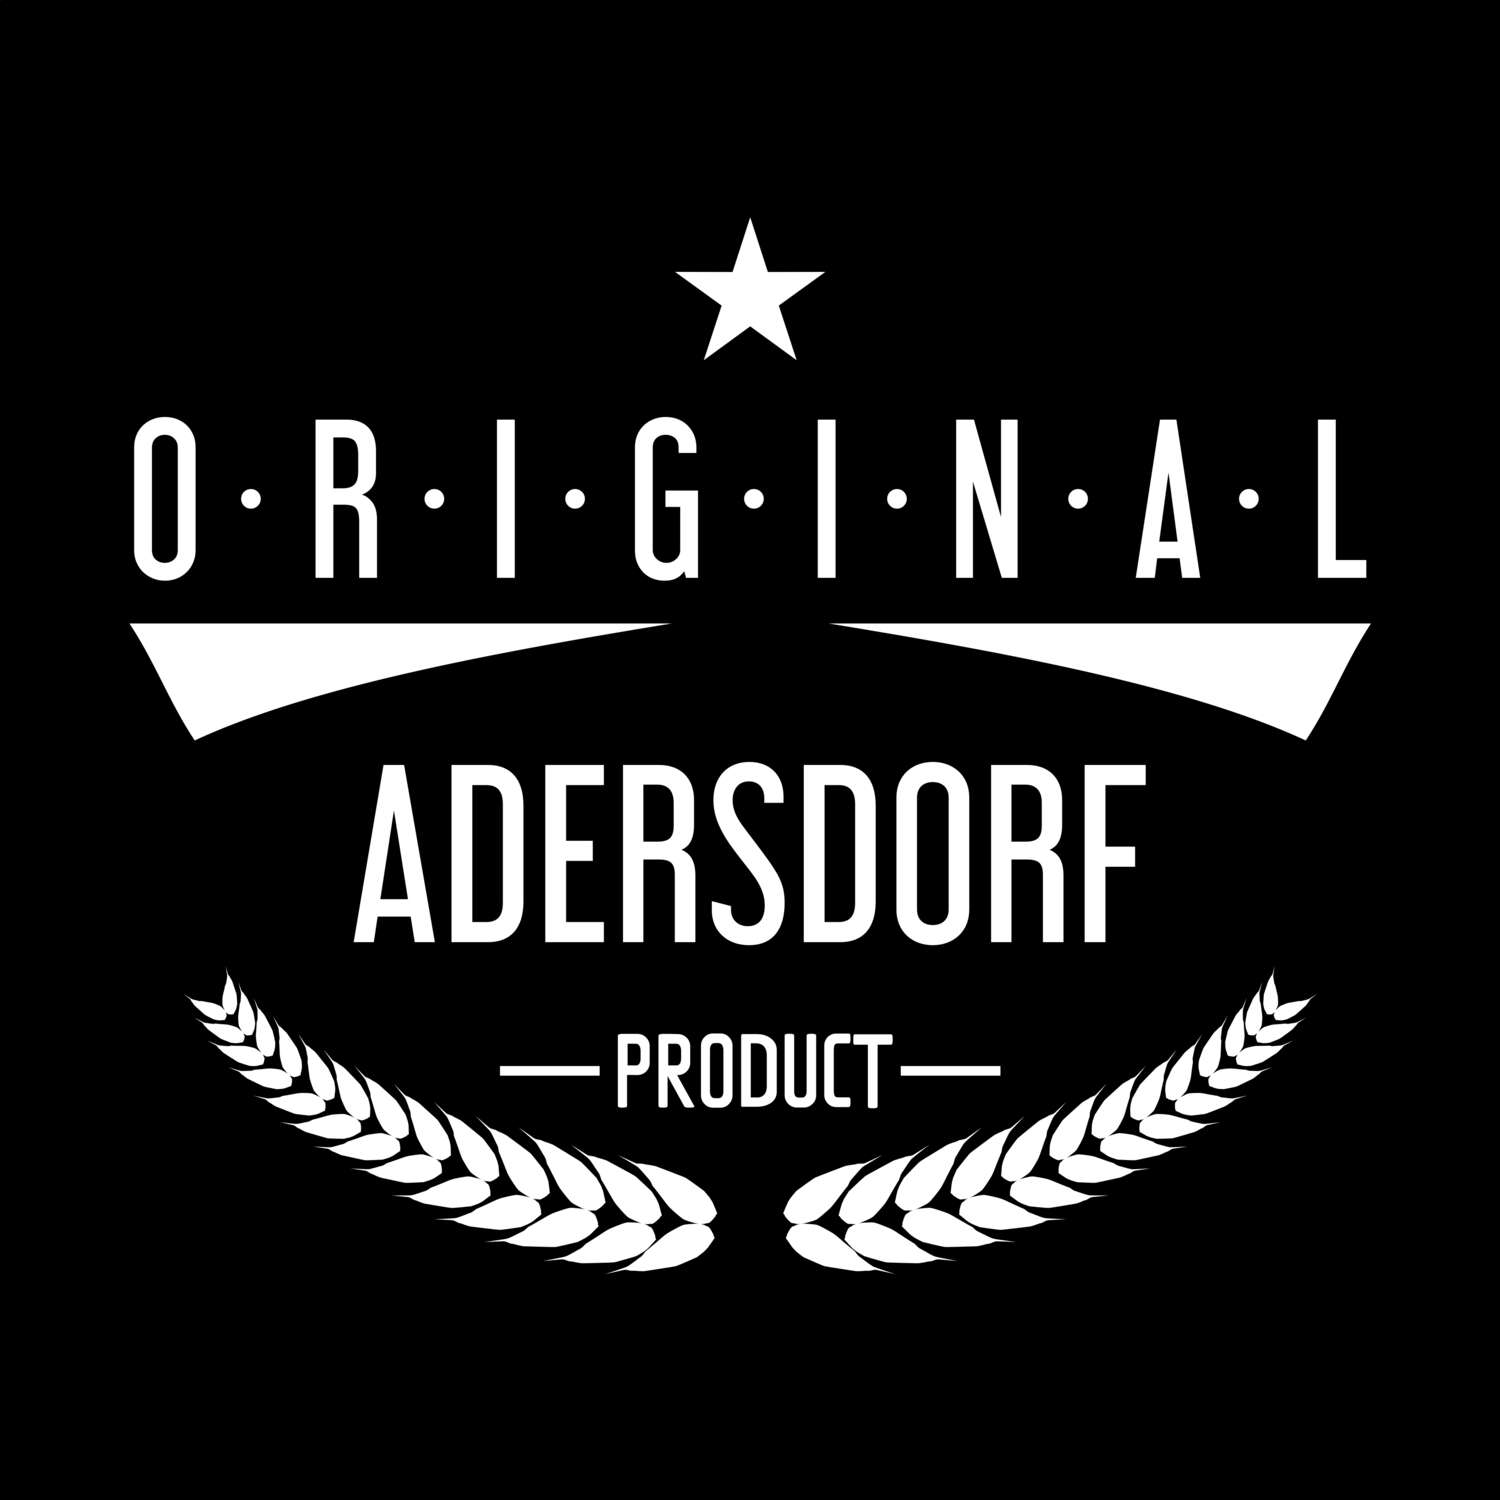 Adersdorf T-Shirt »Original Product«